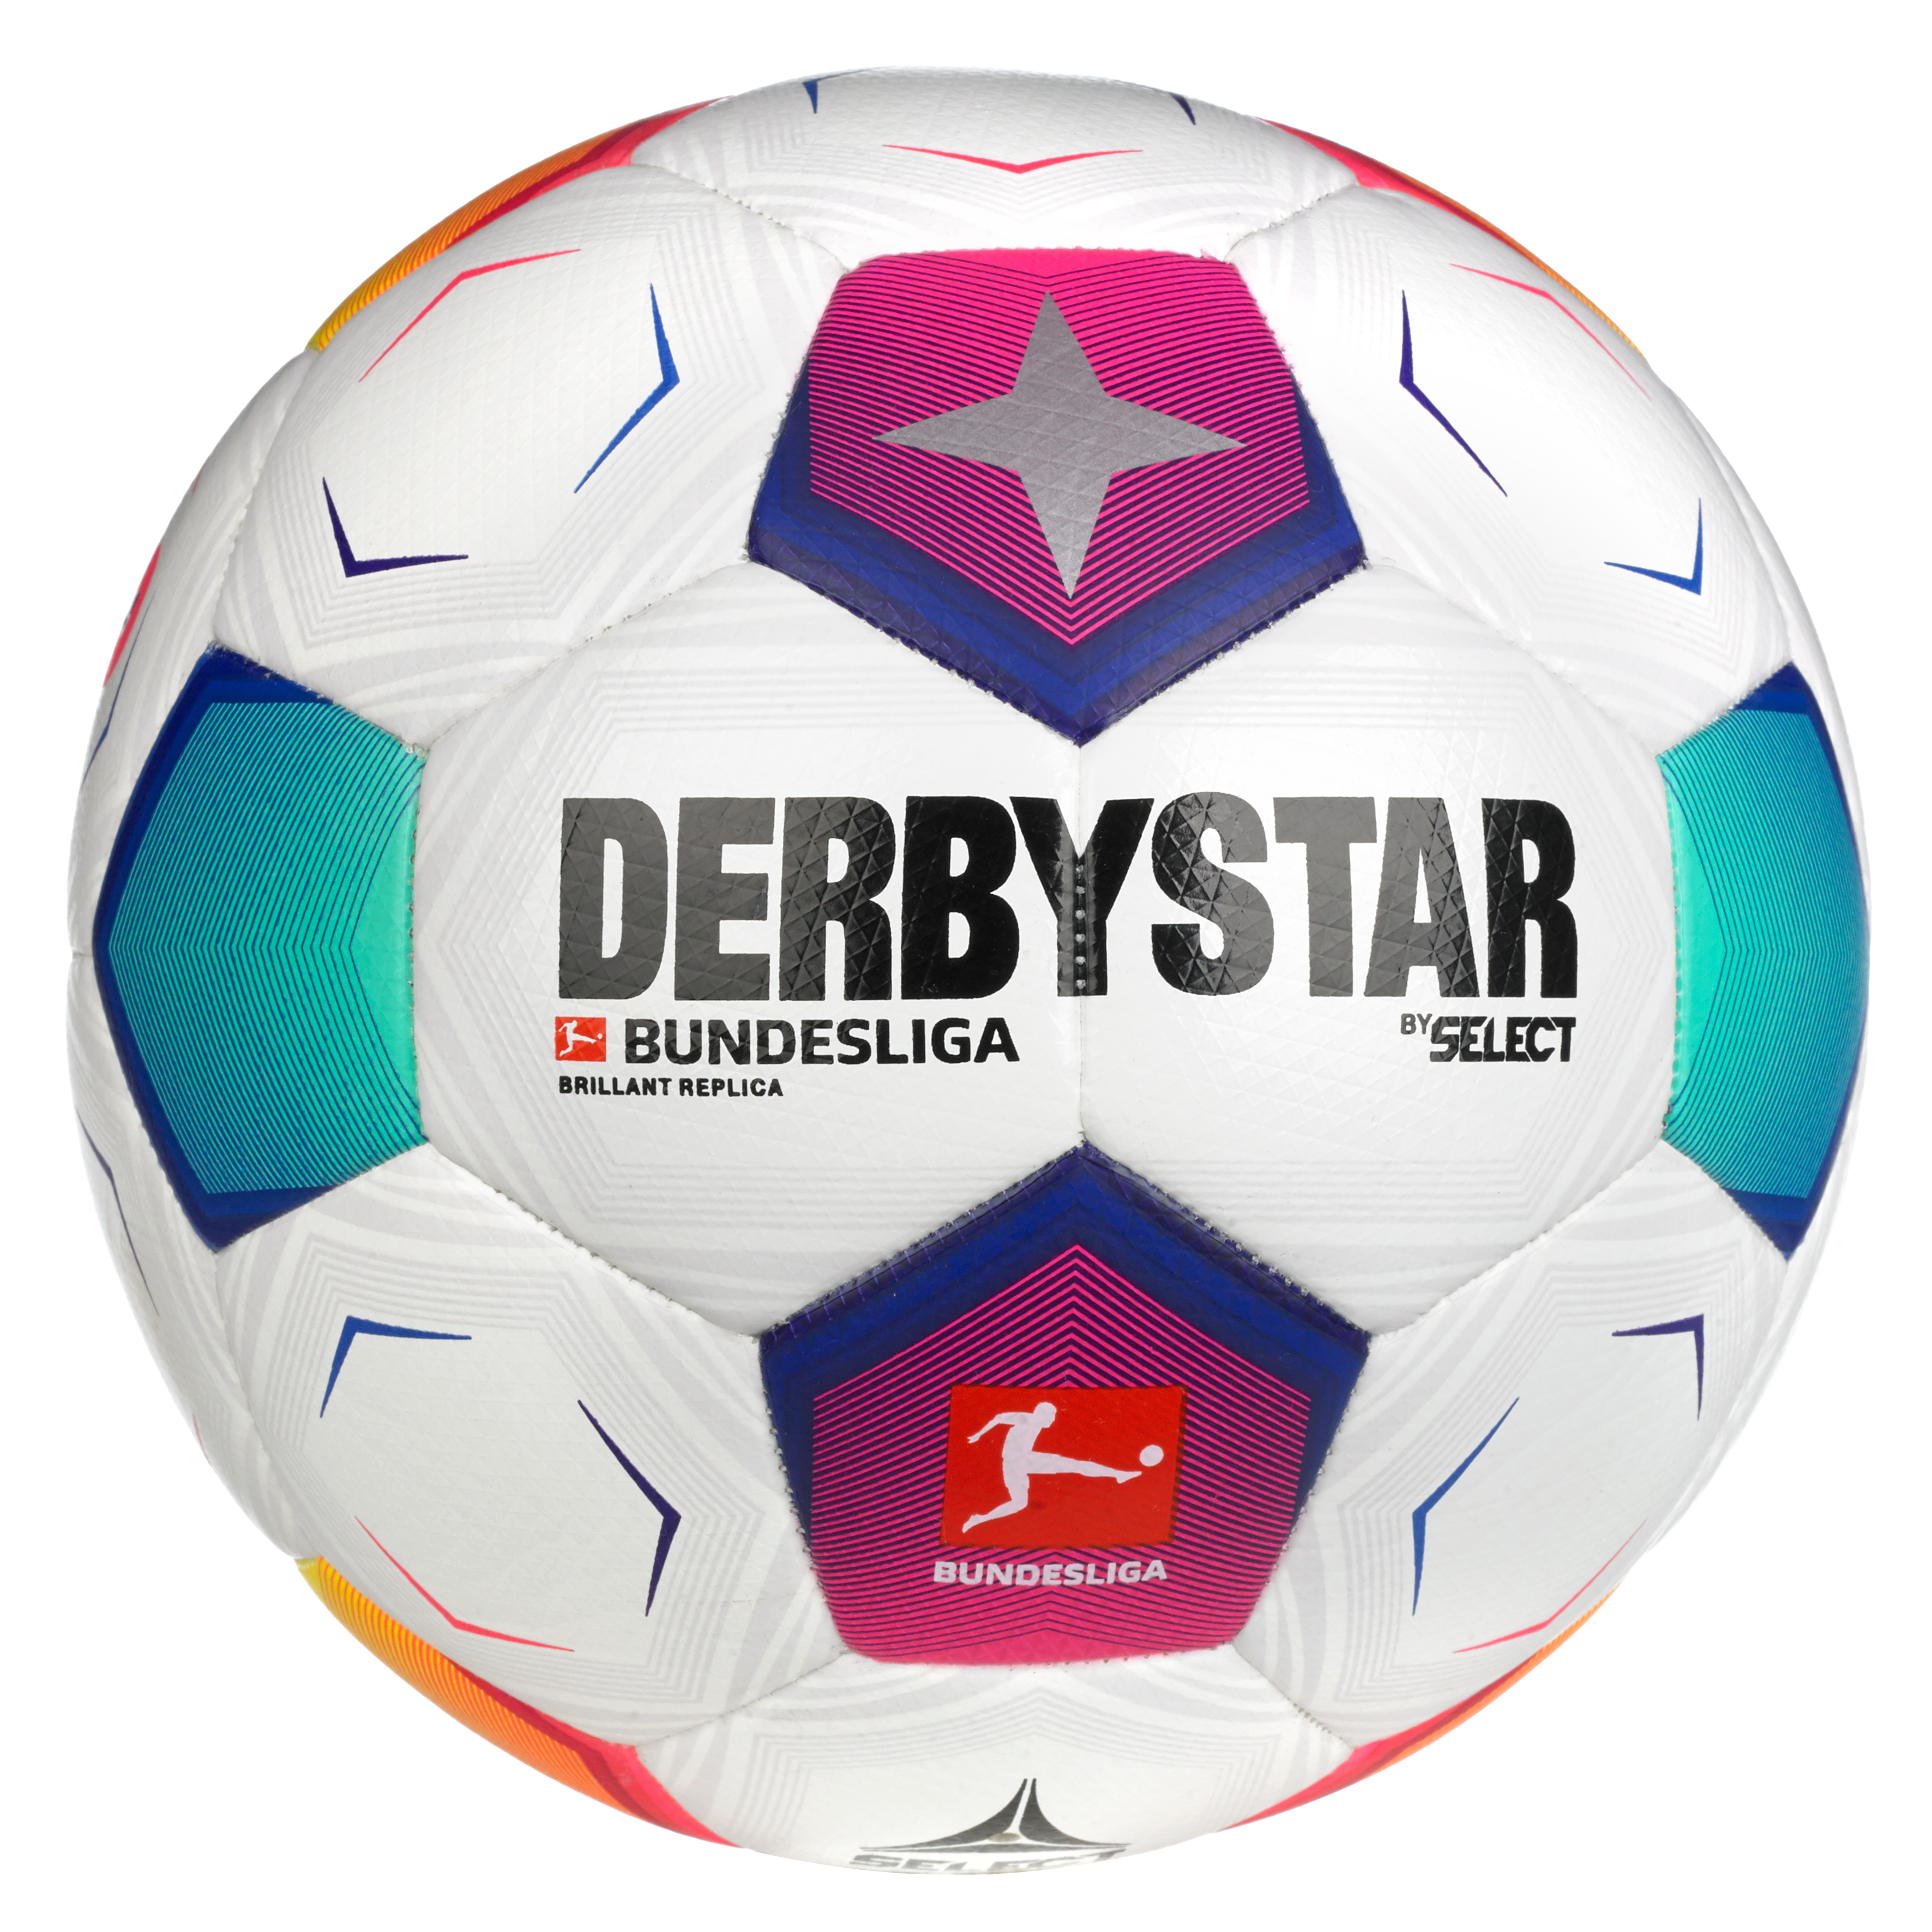 Derbystar Fußball Bundesliga Brillant Replica APS V23